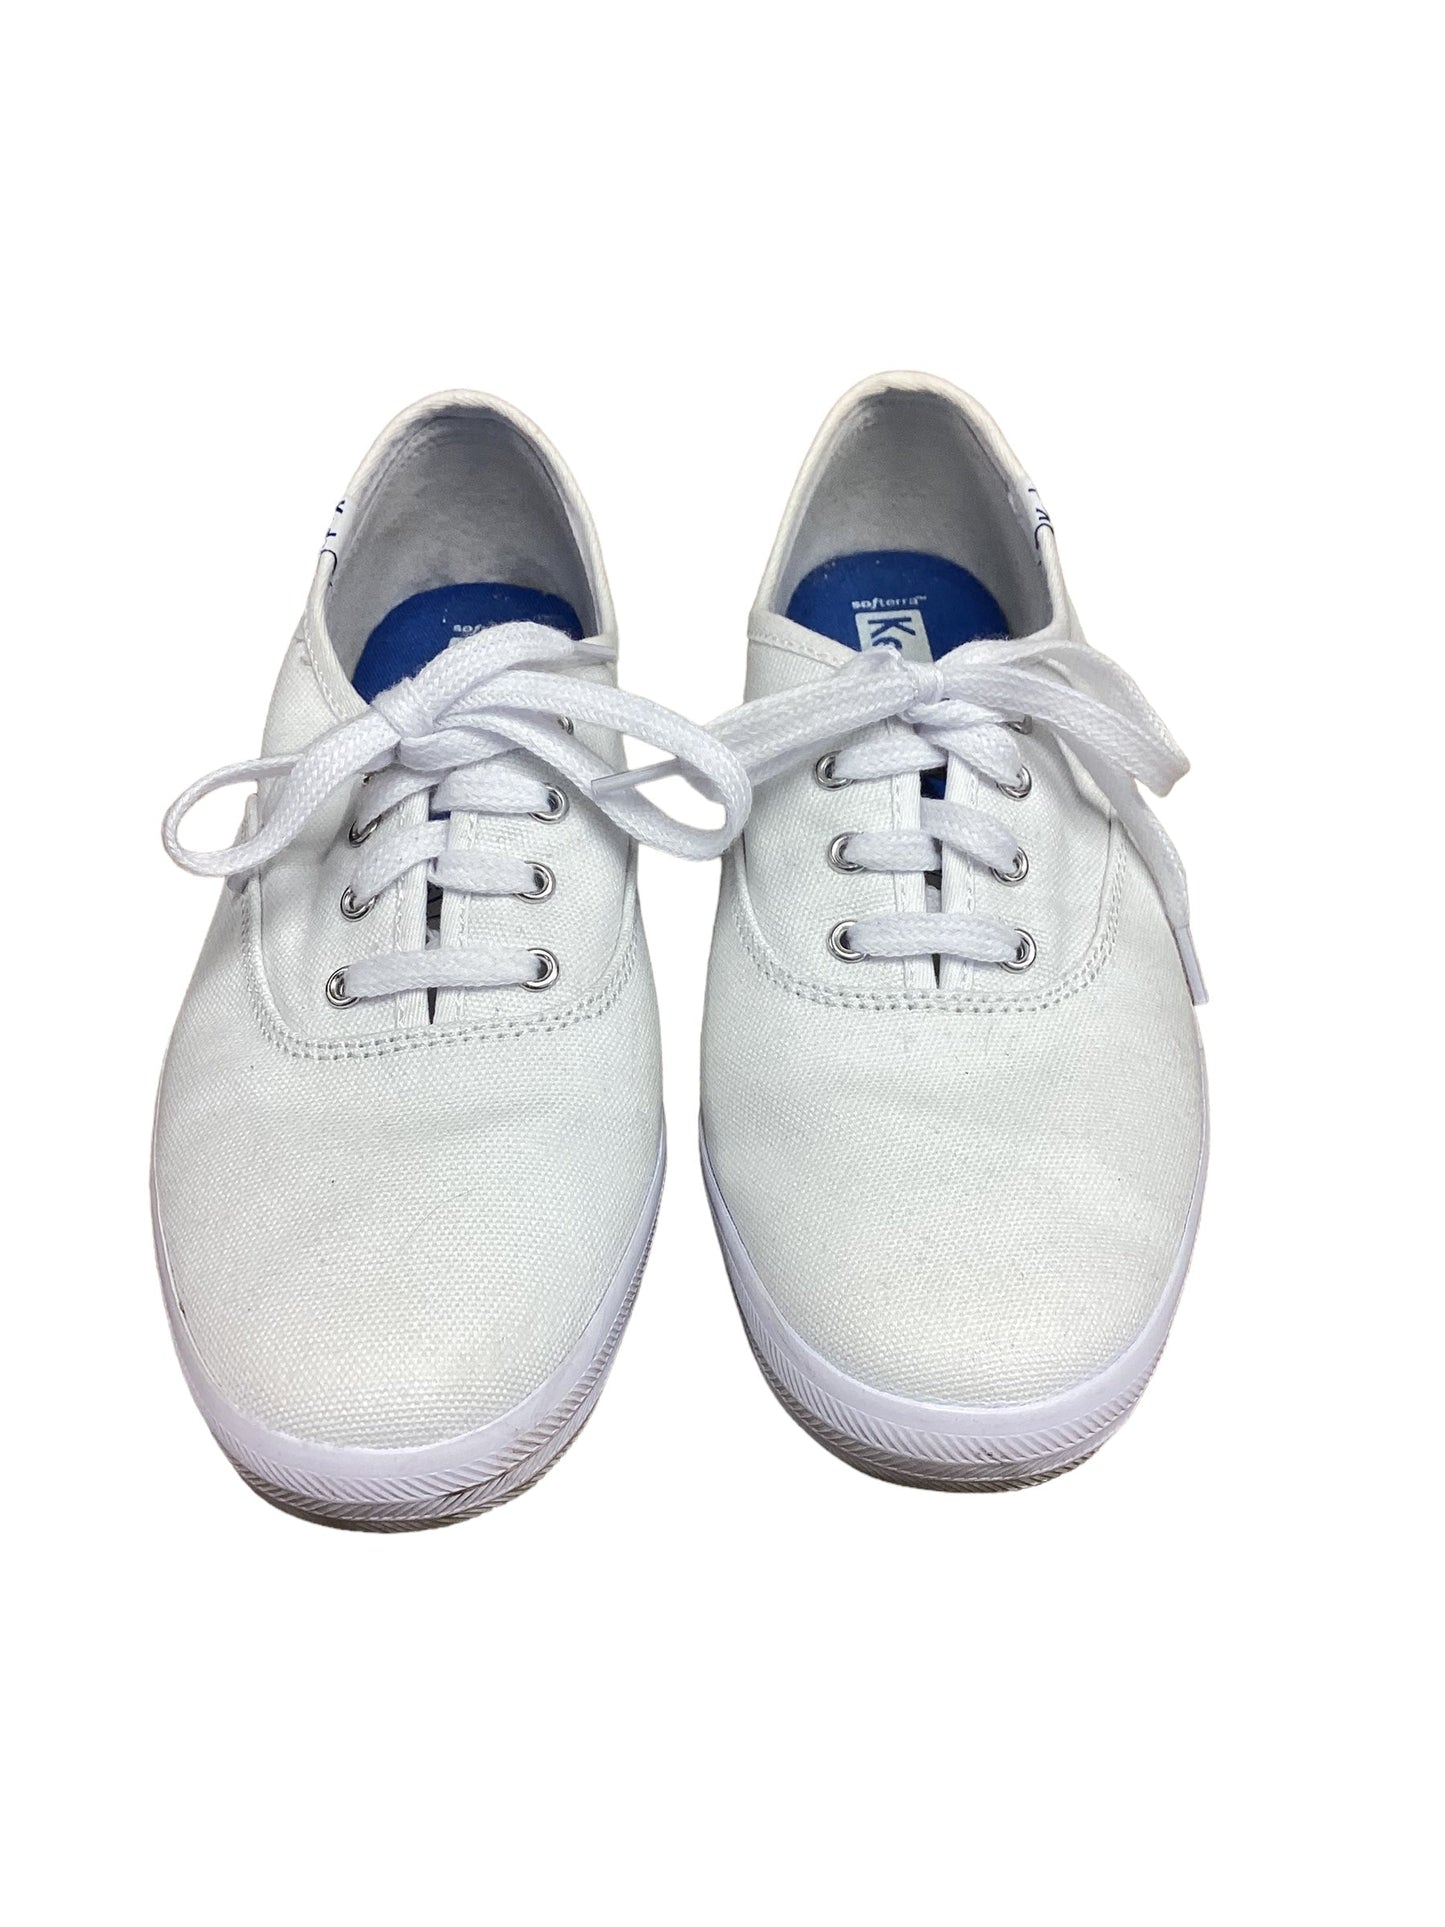 White Shoes Flats Keds, Size 7.5